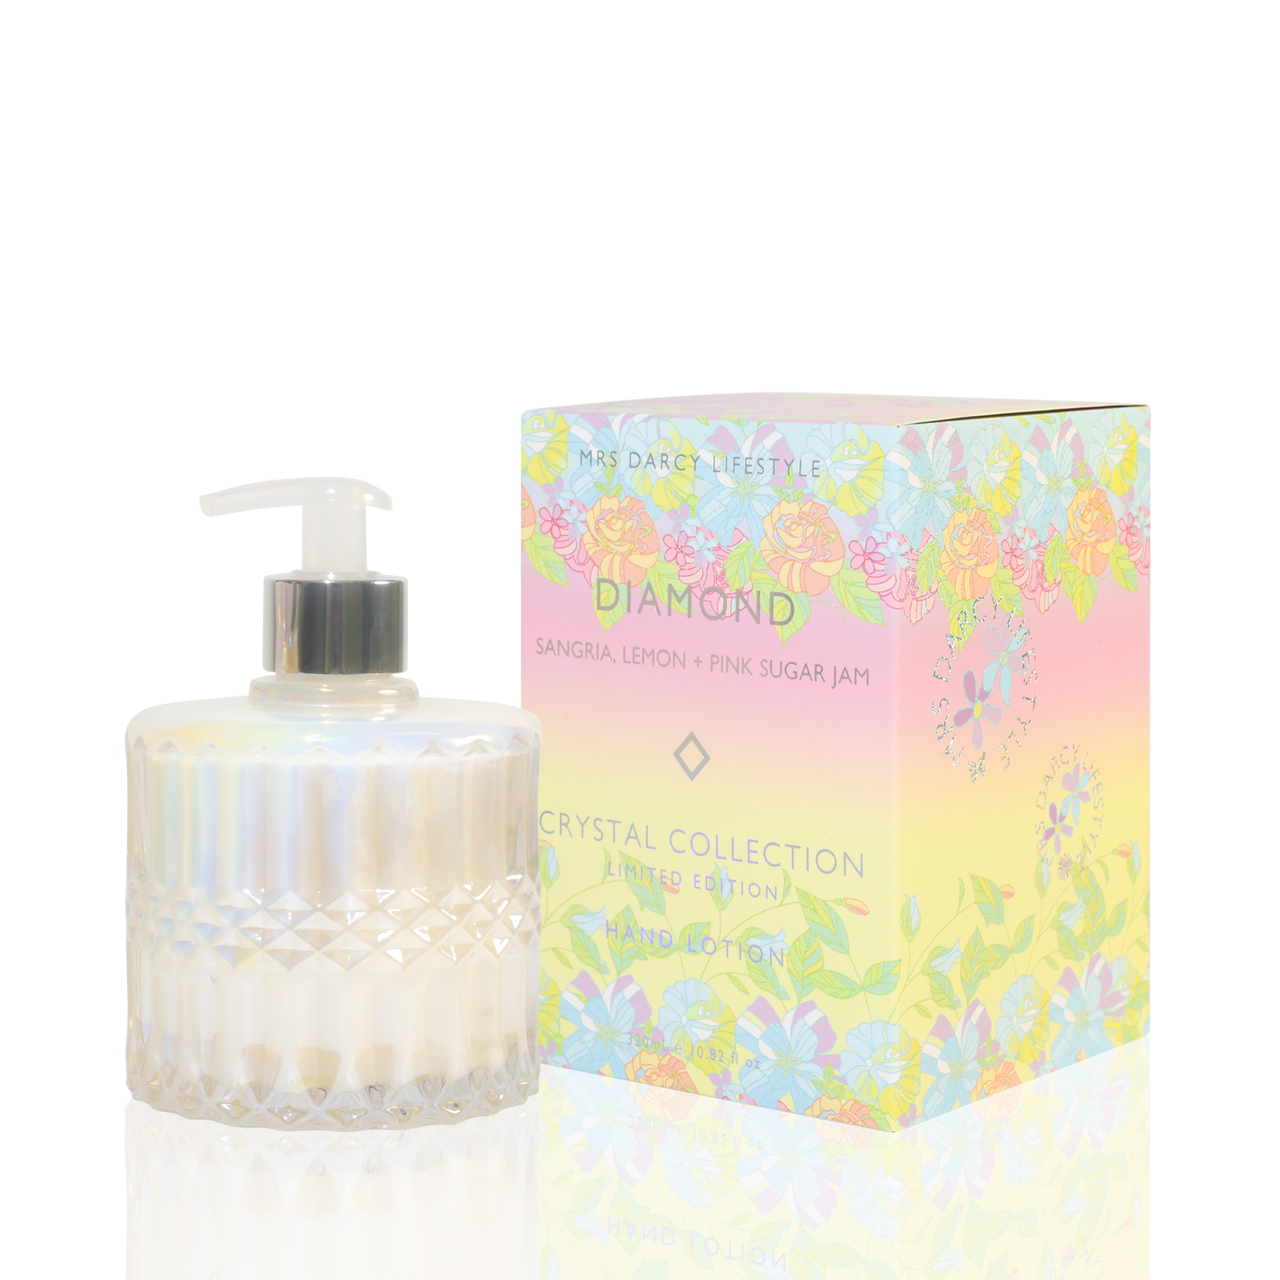 Mrs Darcy Diamond Hand Lotion - Sangria, Lemon and Pink Sugar Jam